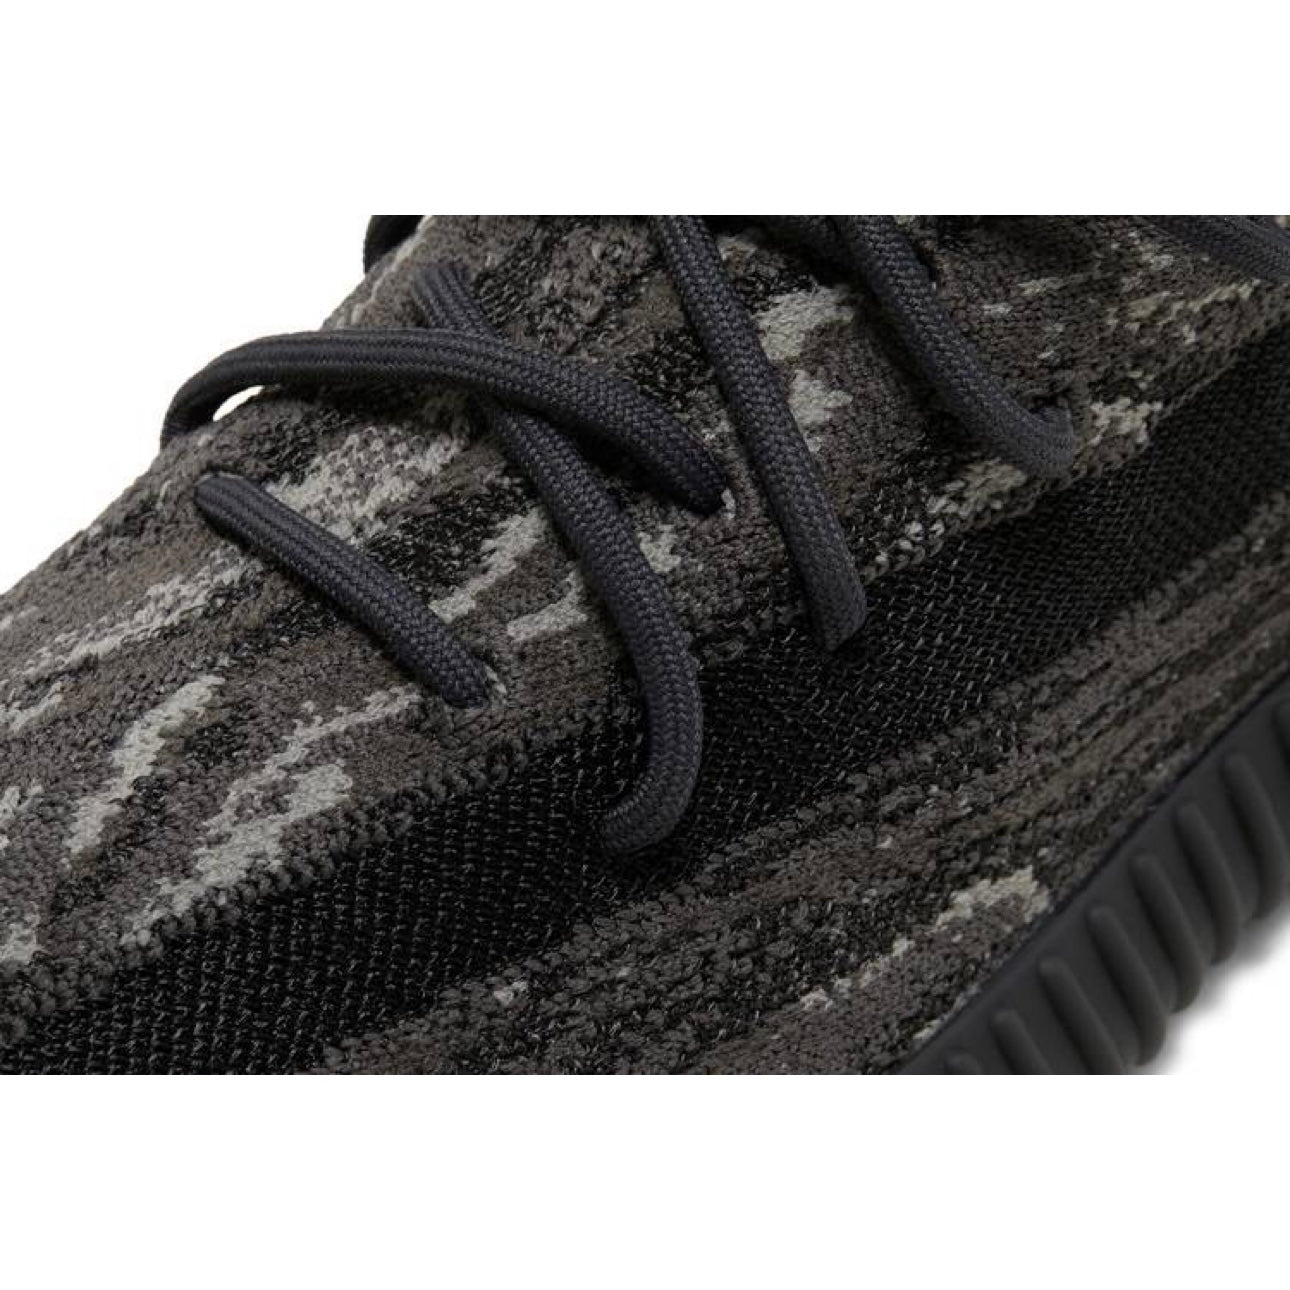 Adidas Yeezy Boost 350 V2 MX Dark Salt UK 9 Sneaker